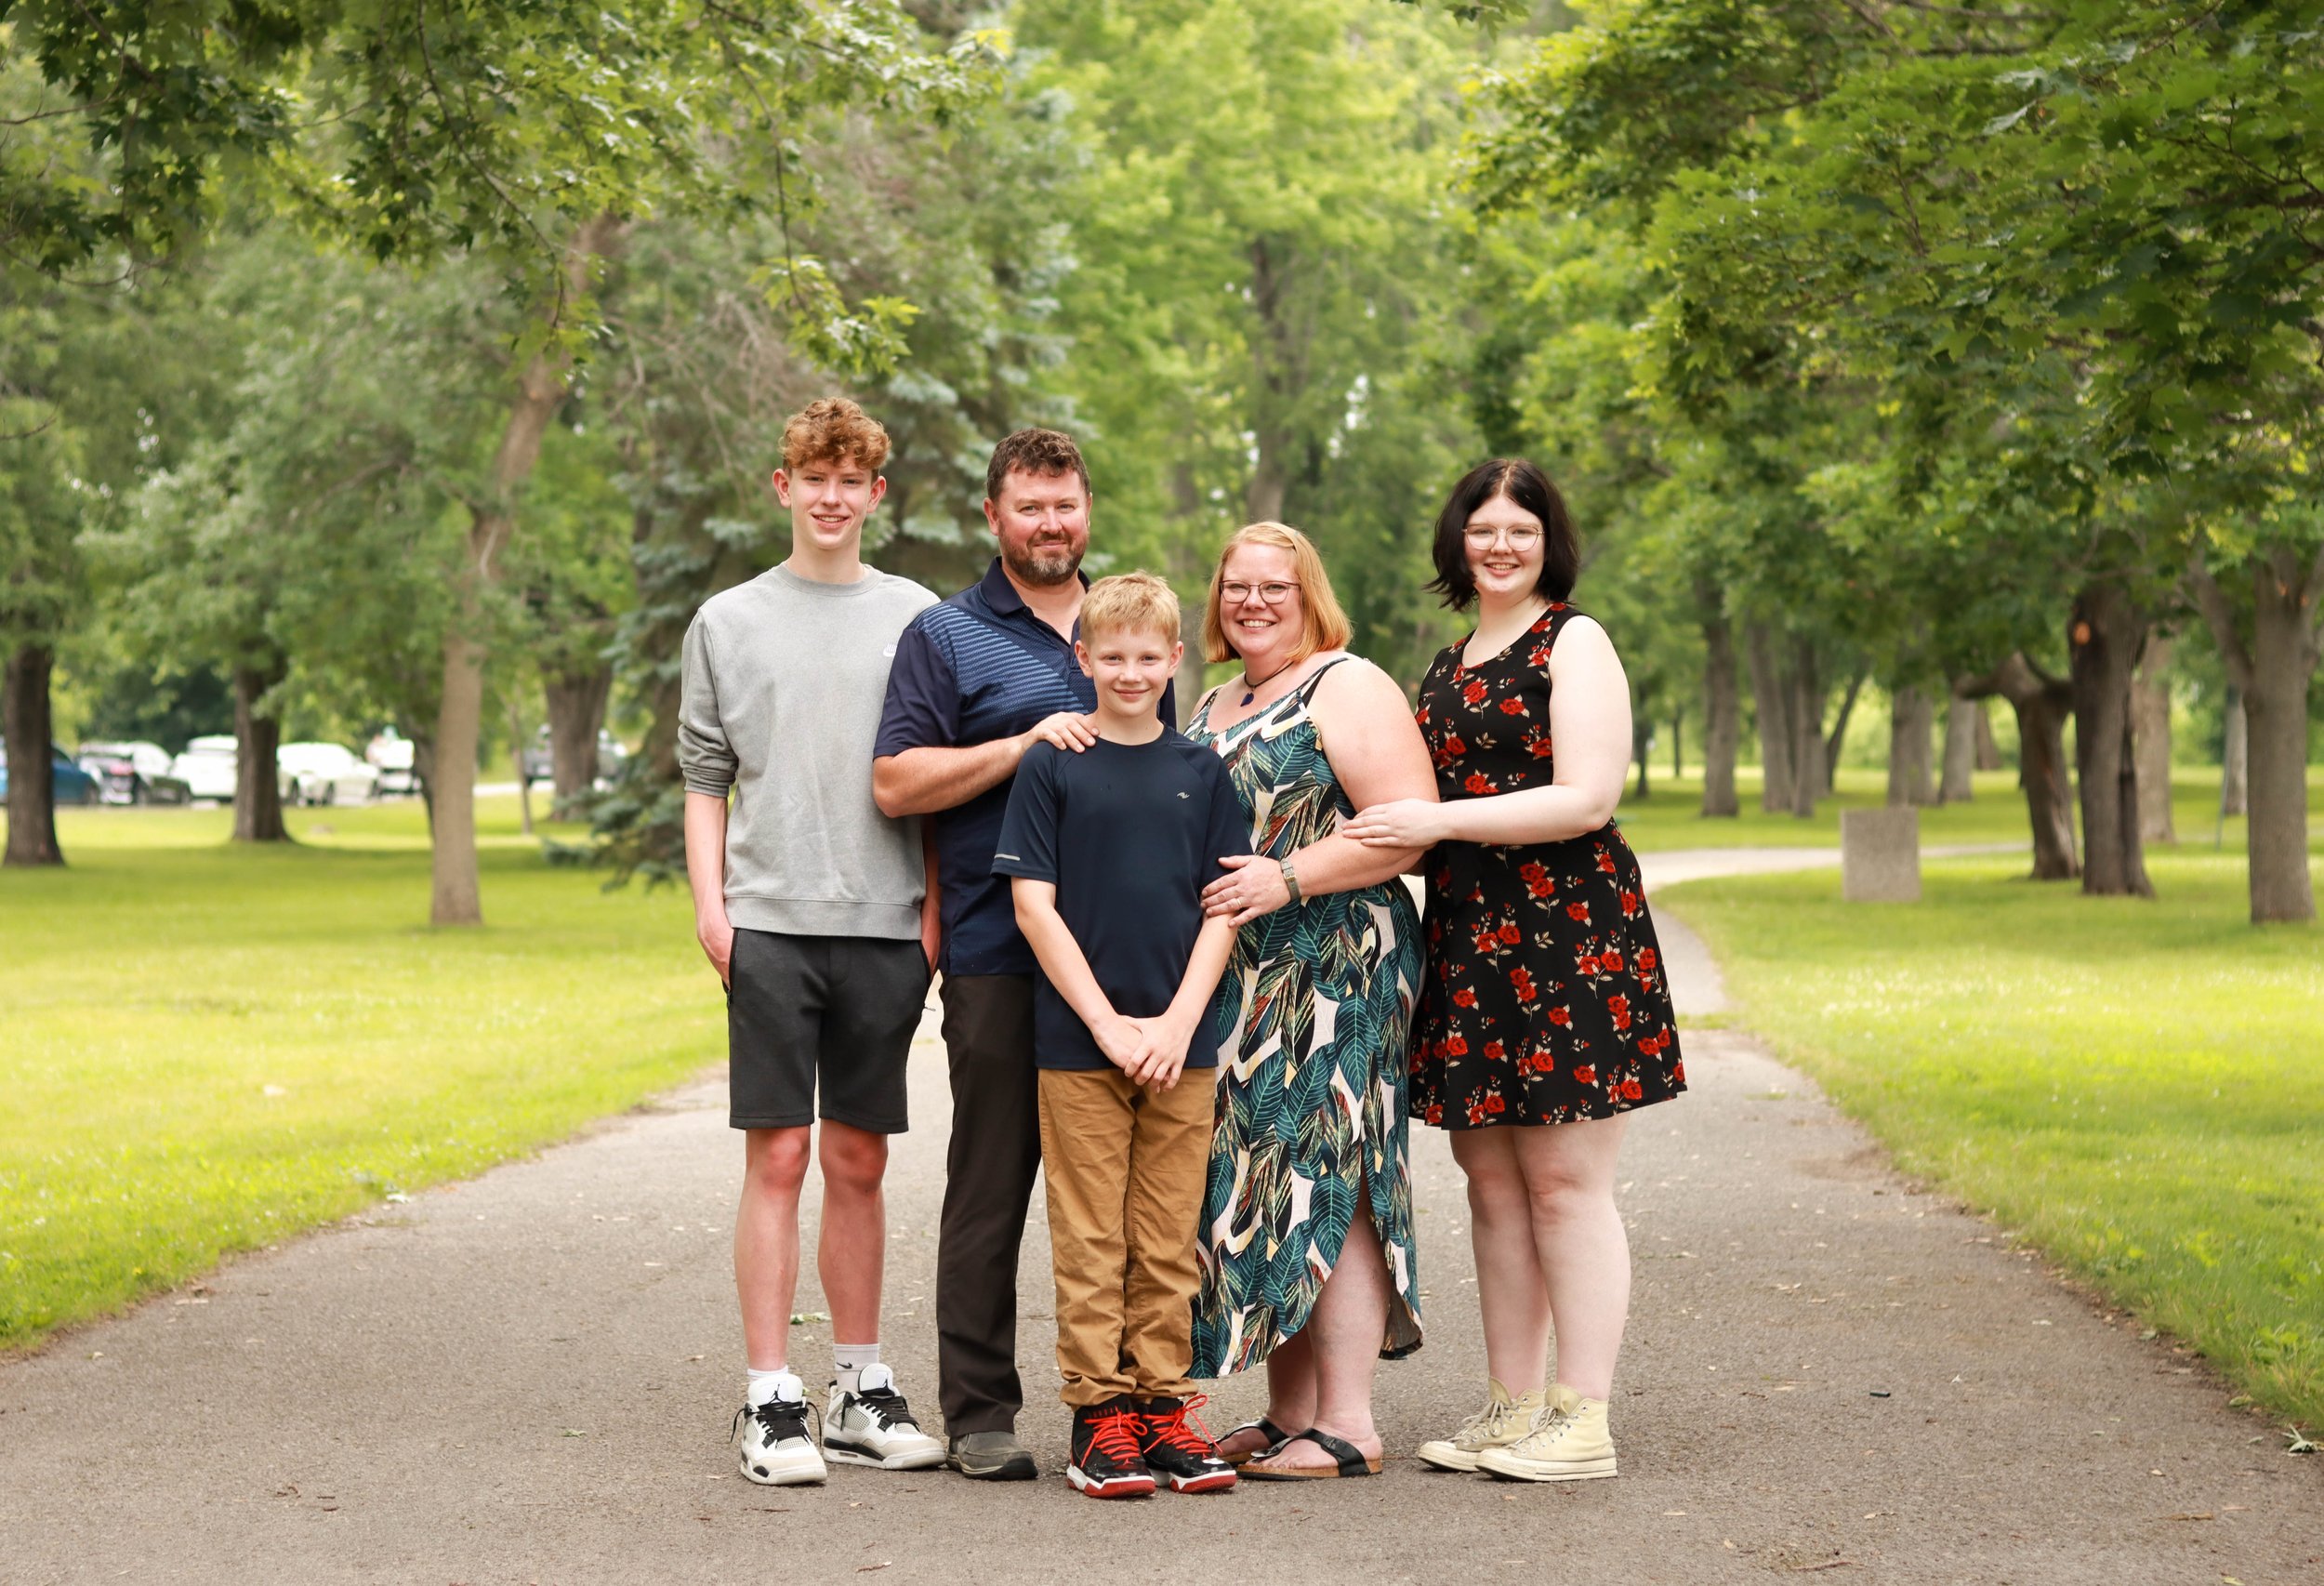  Carleton Place Family Photography - Family Portrait at Riverside Park 